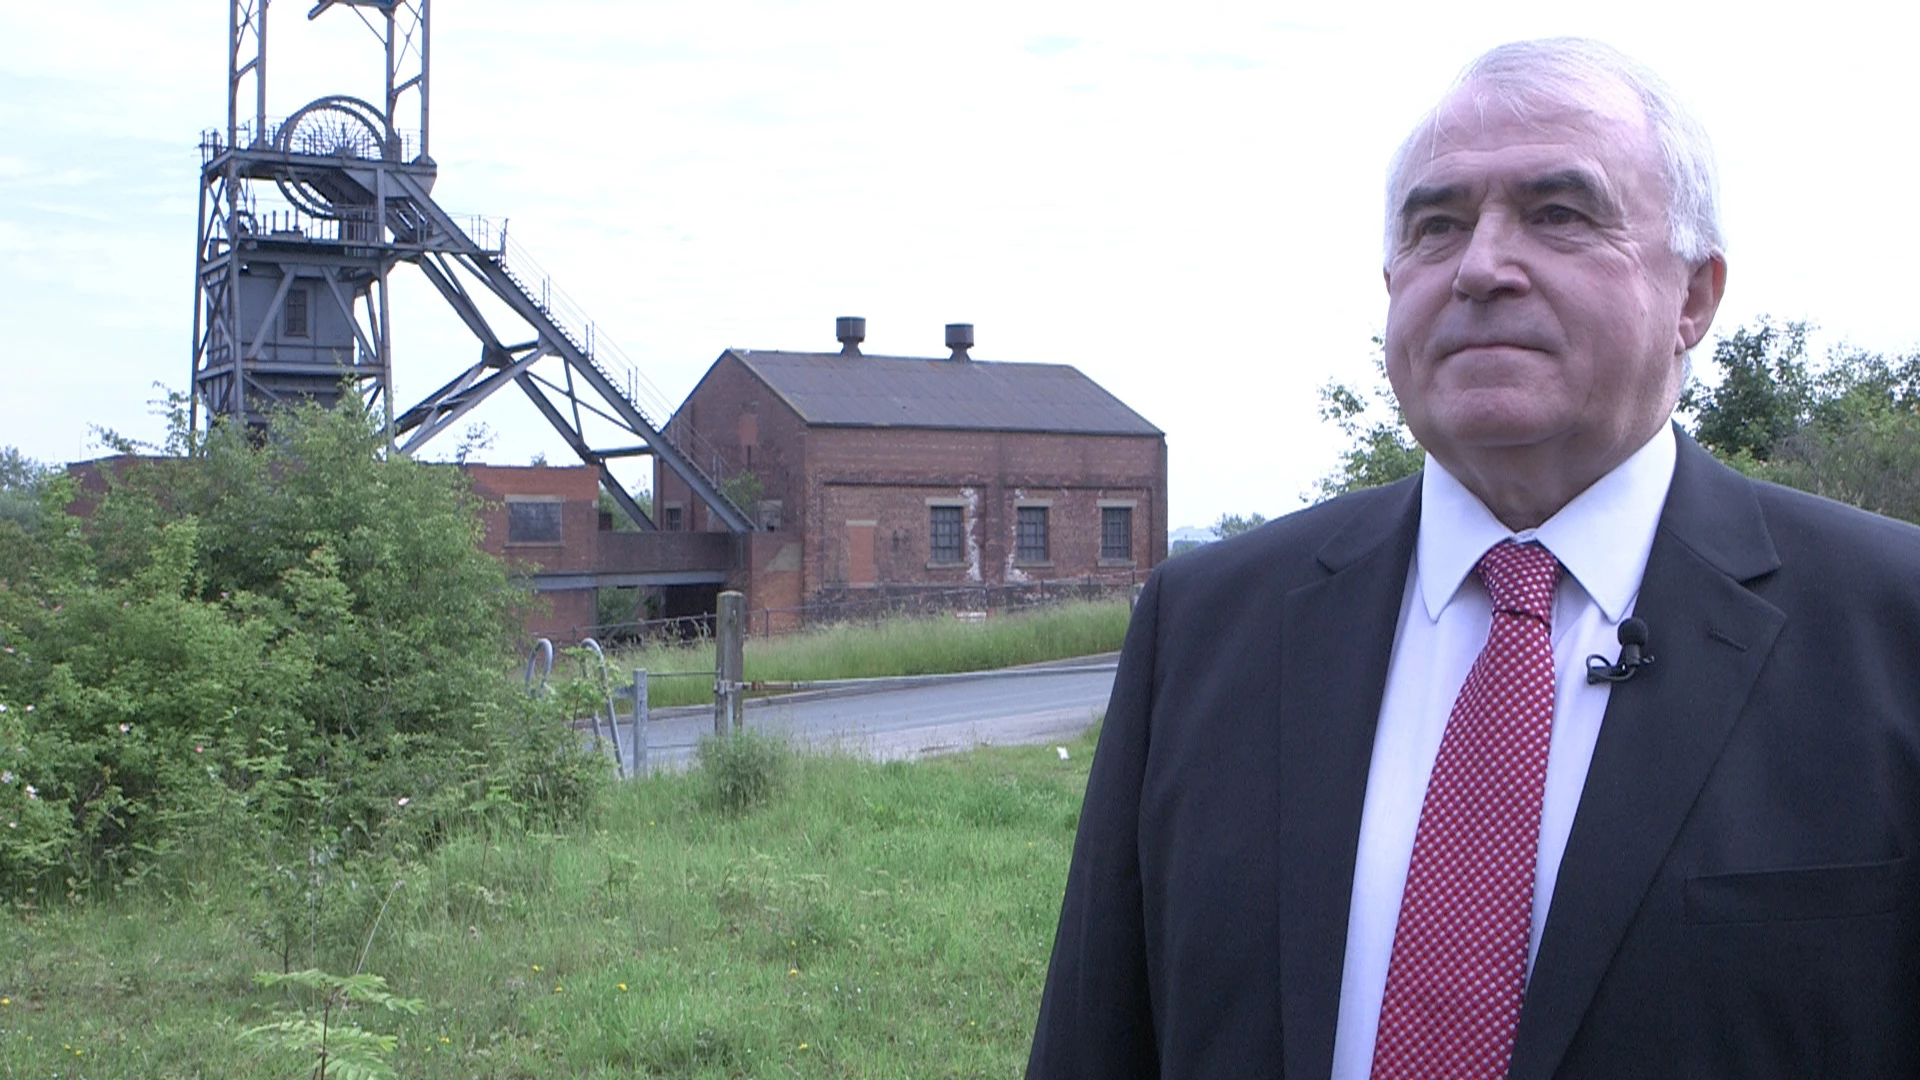 Chairman of the Coalfields Regeneration Trust, Peter McNestry